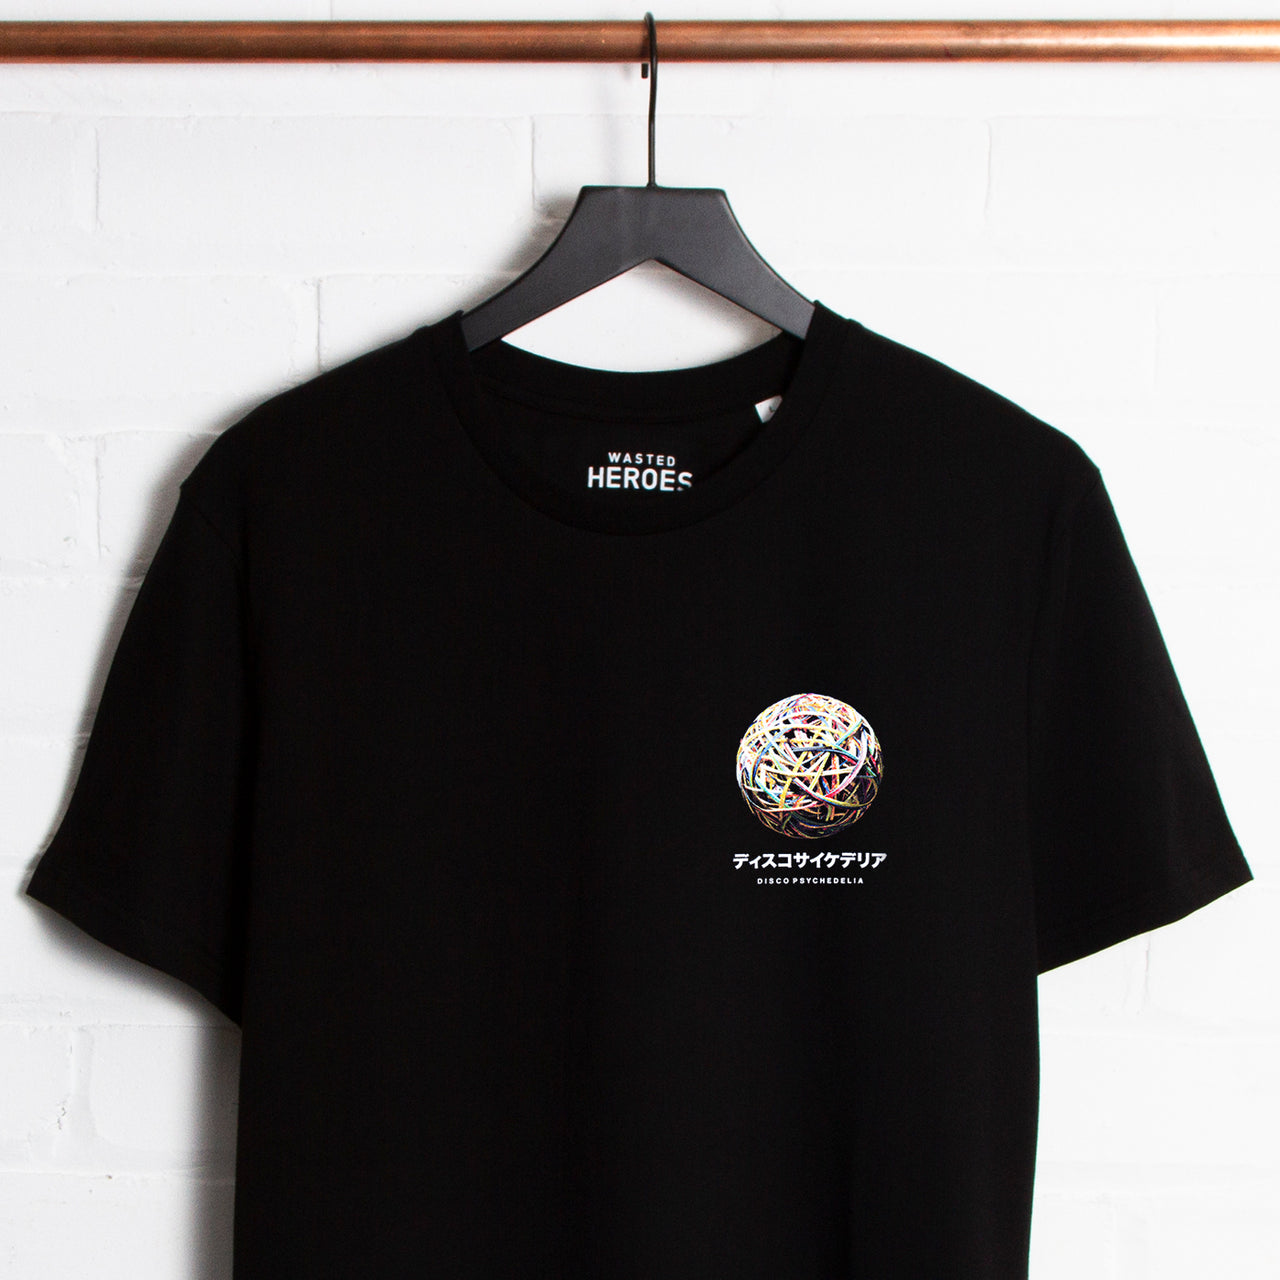 Crest Orb 009 - Tshirt - Black